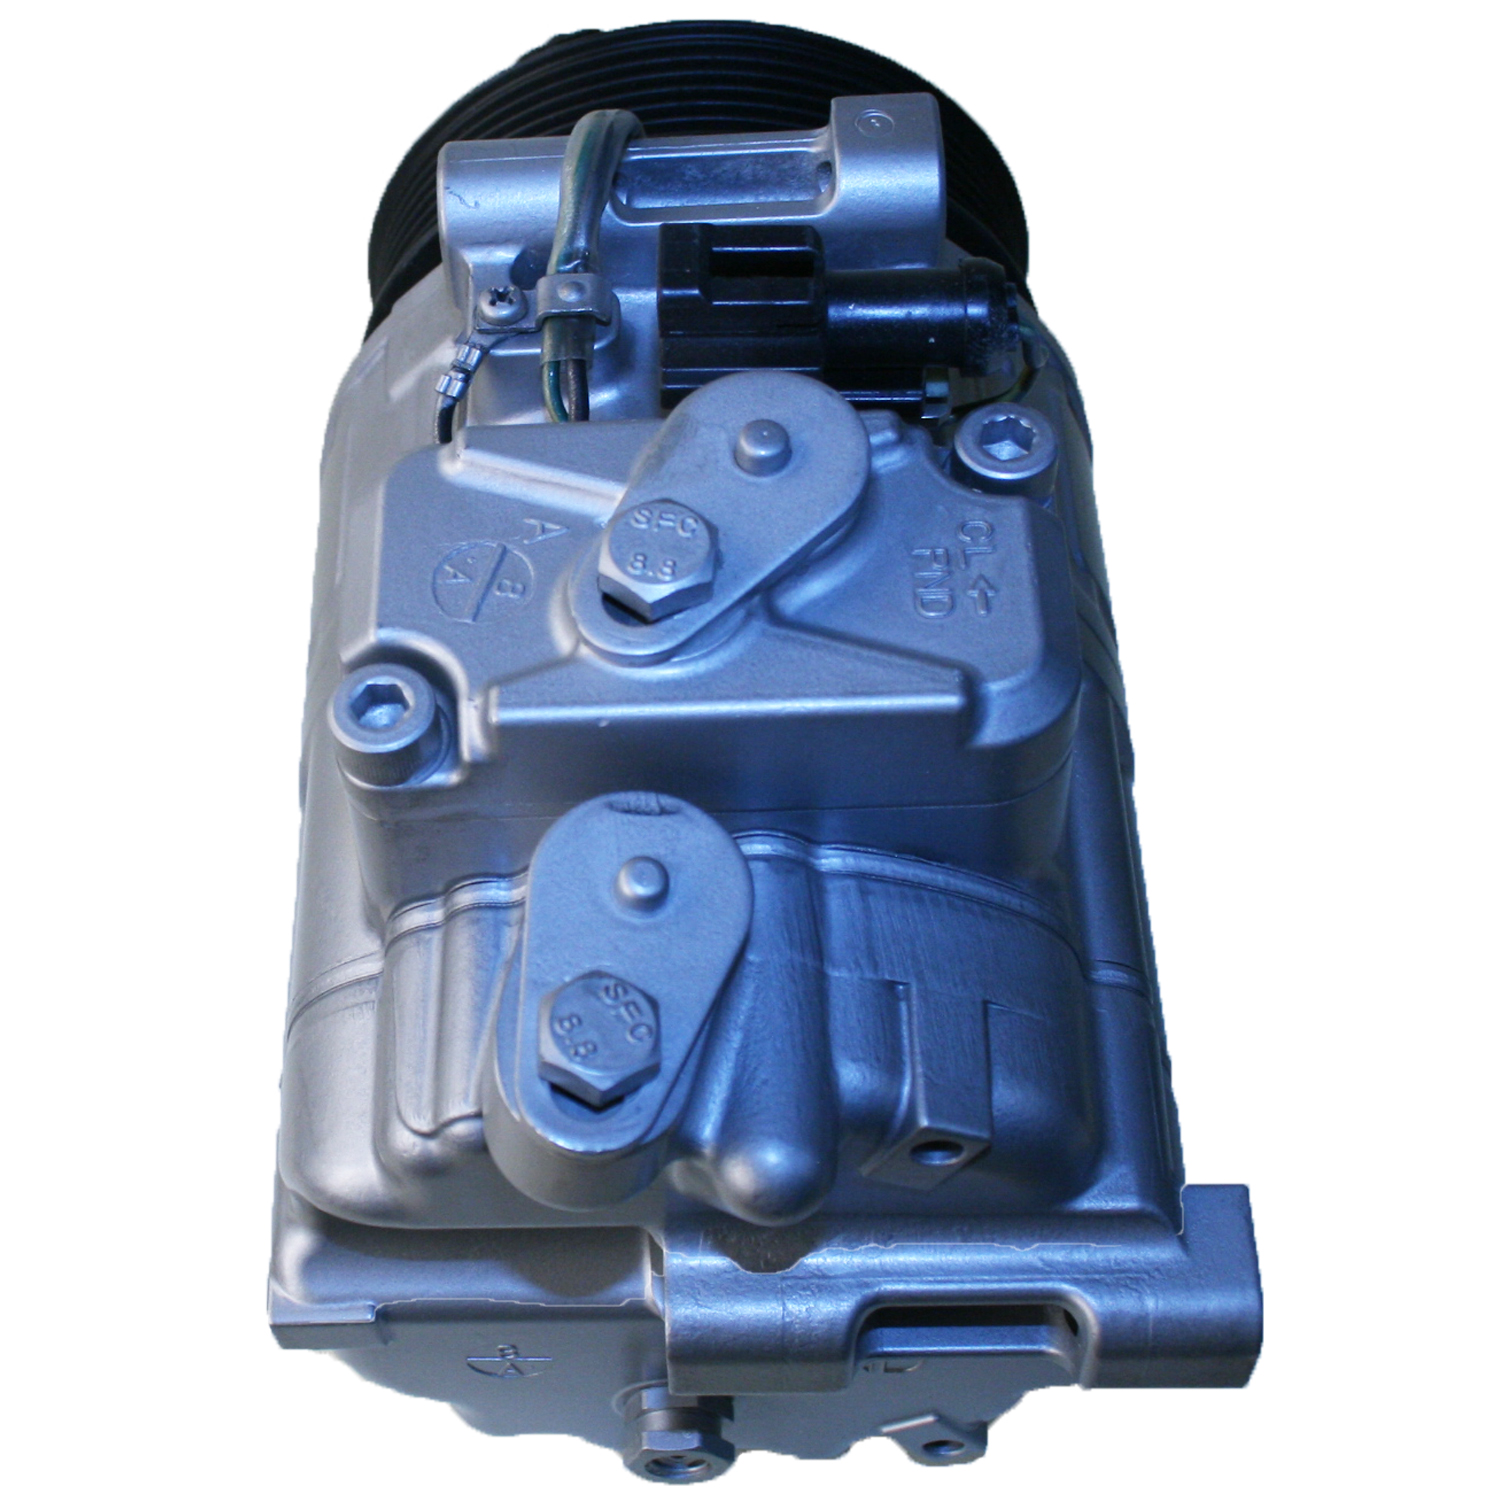 TCW Compressor 41254.6T1 Remanufactured Product Image field_60b6a13a6e67c